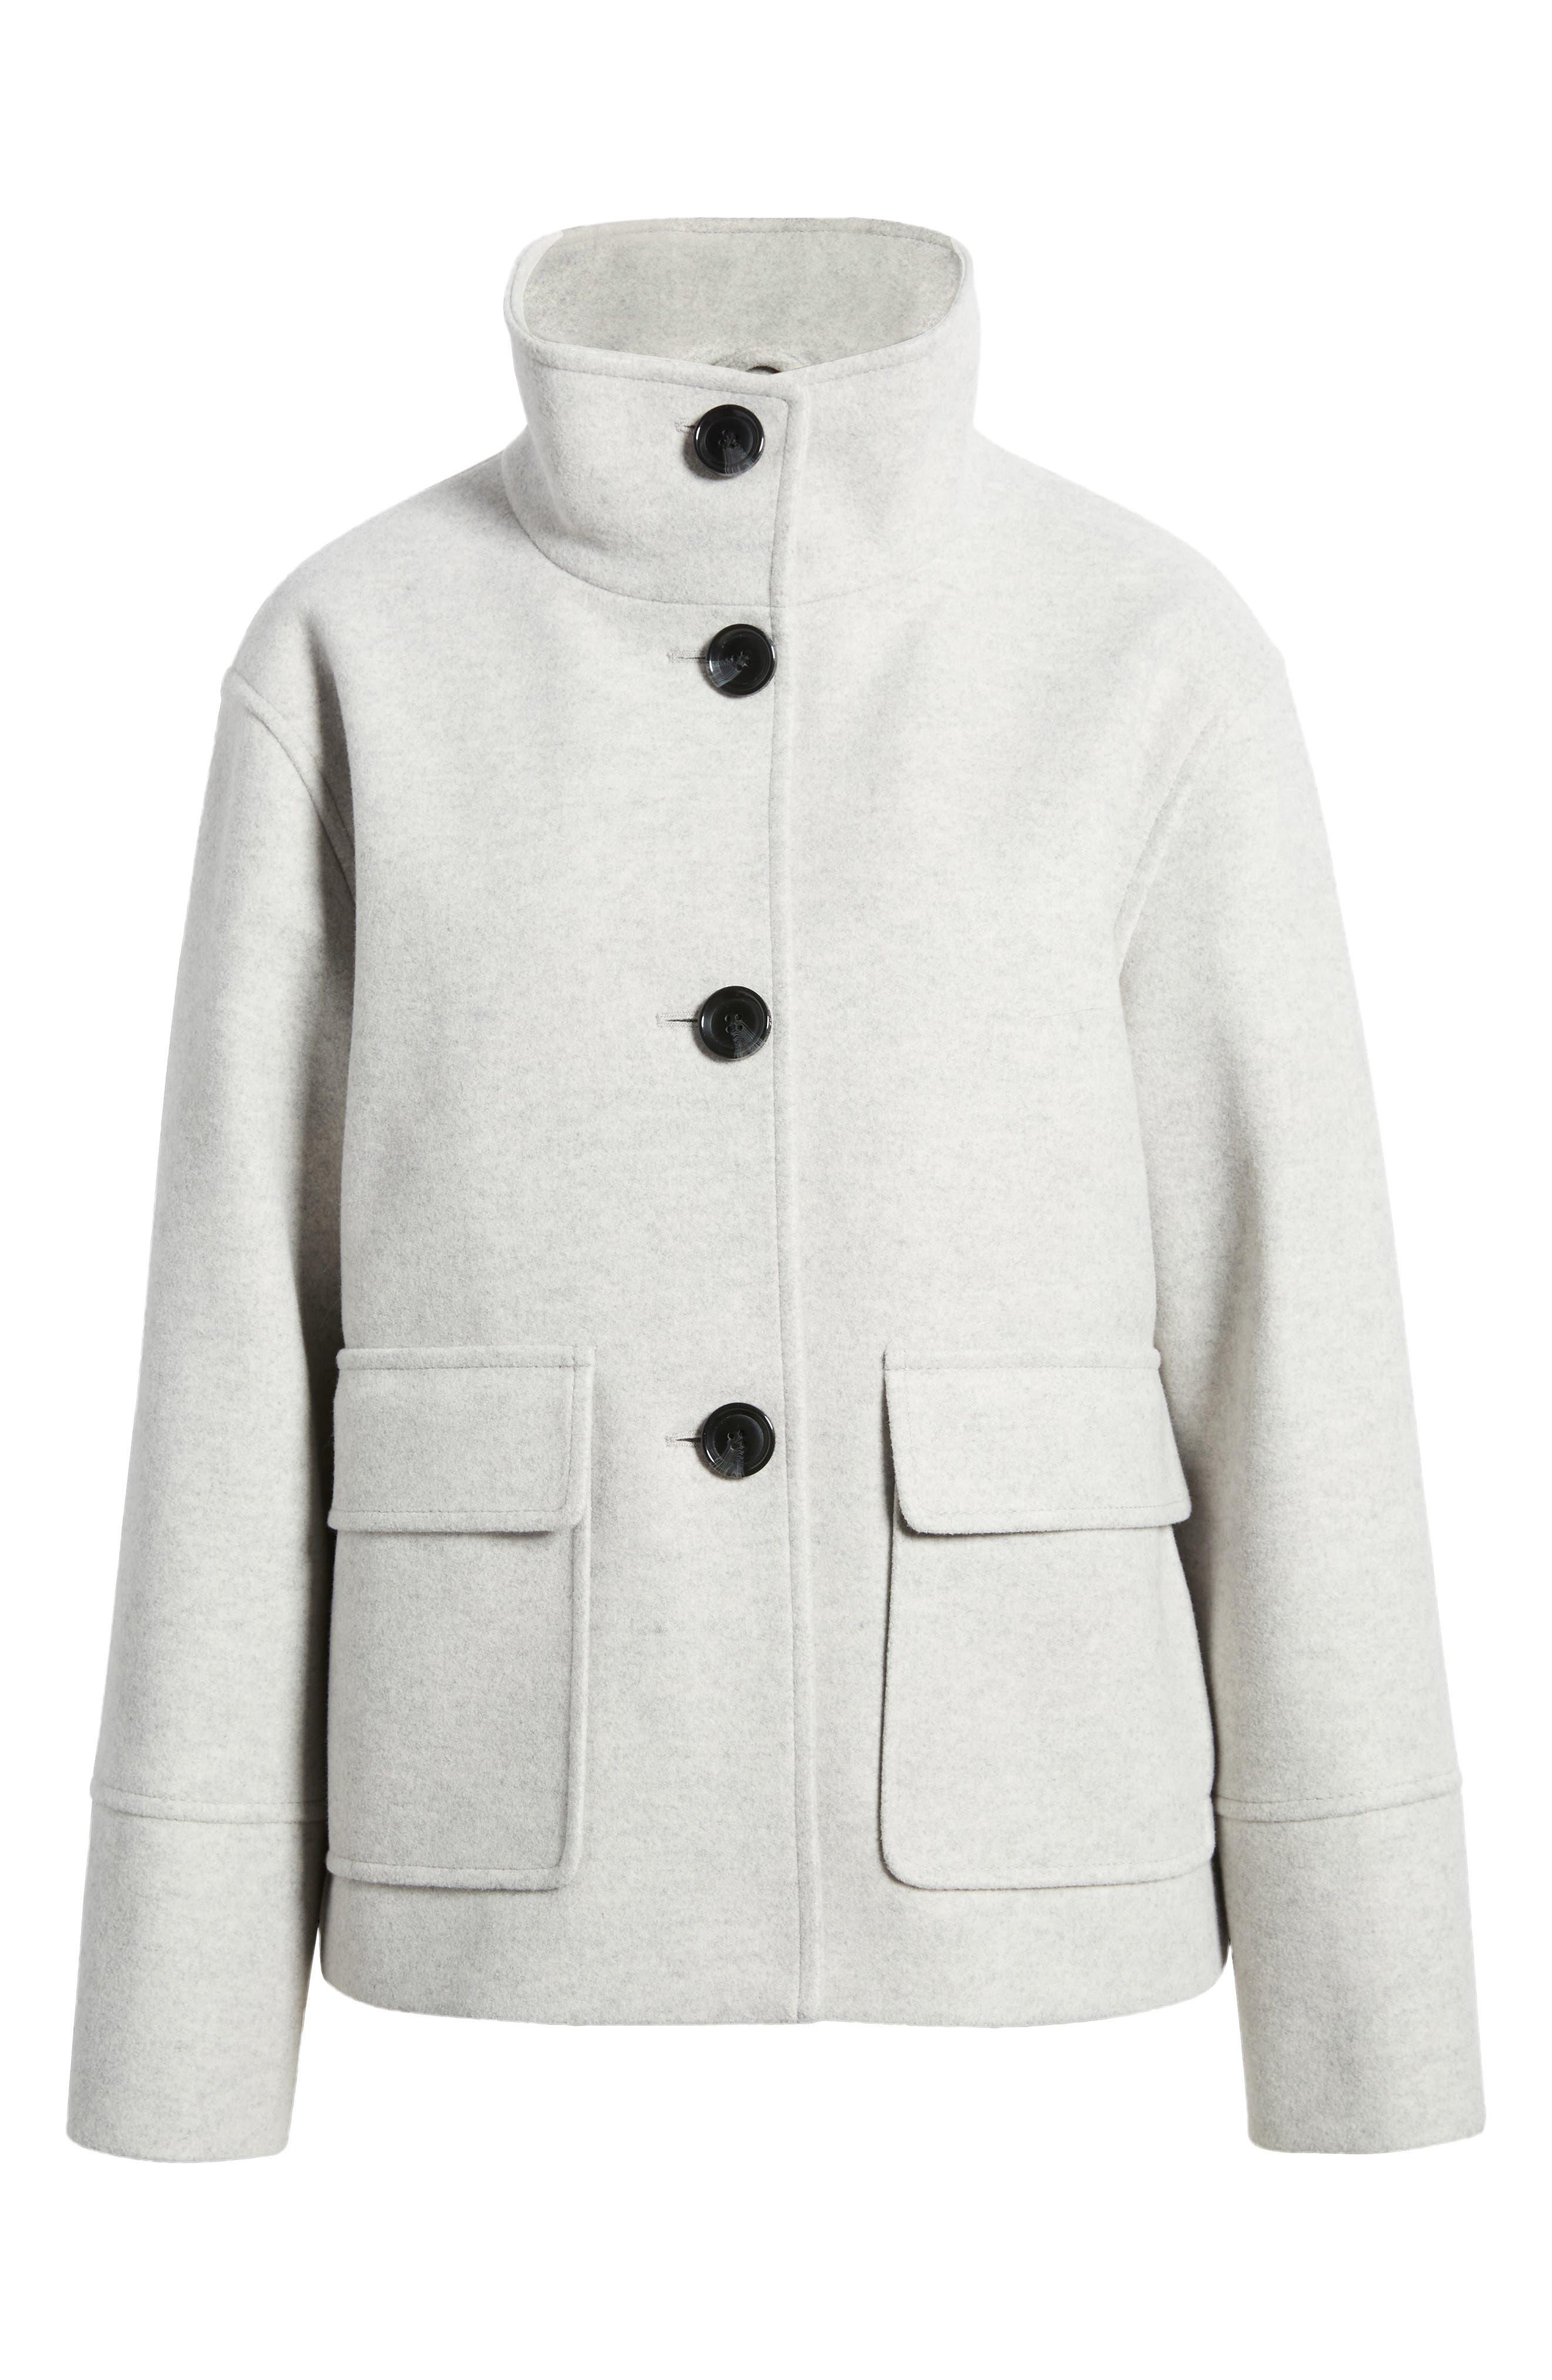 Sam Edelman Stand Collar Coat in Gray | Lyst